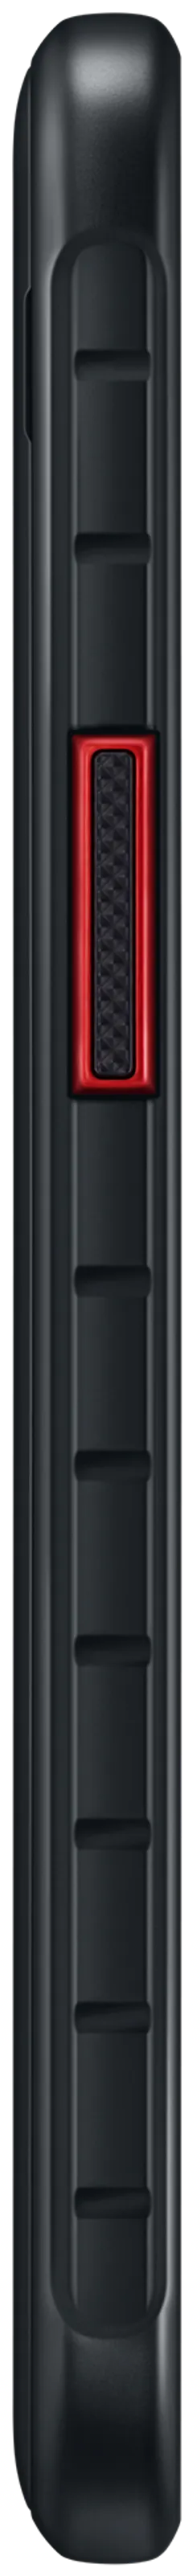 Samsung Galaxy Xcover 5 Enterprise Edition black - 3